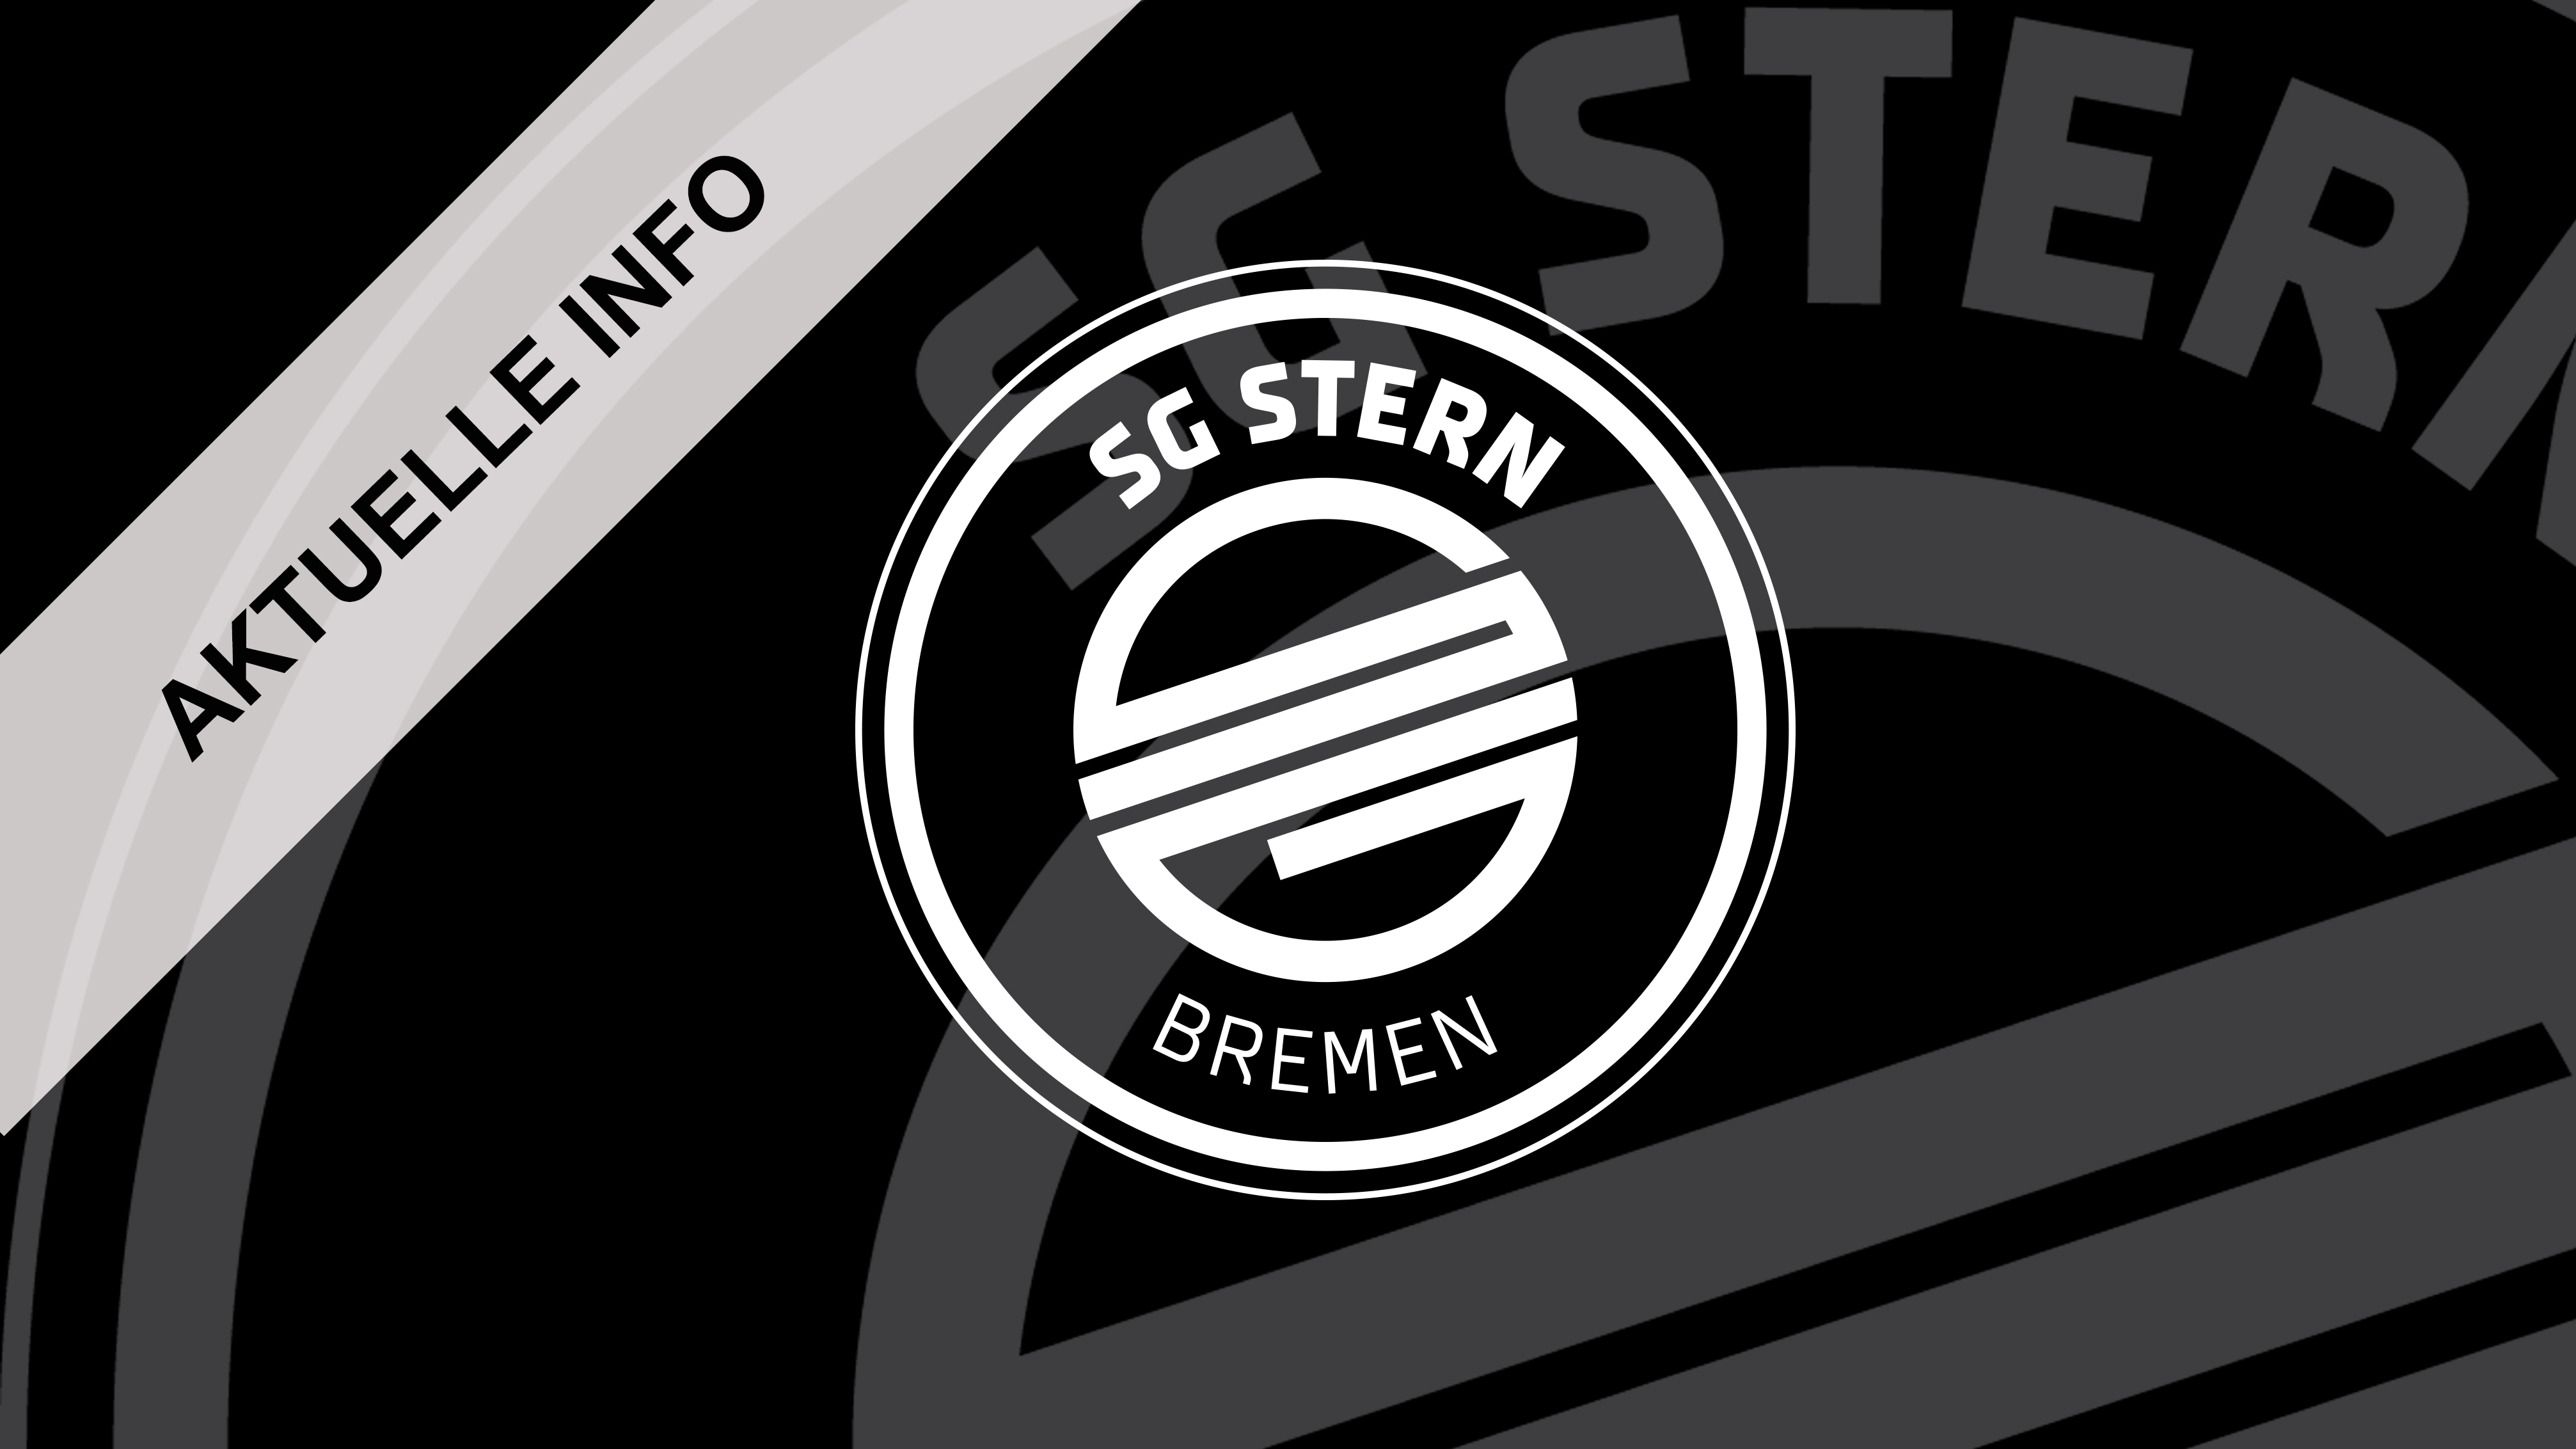 Corona Liveticker: SG Stern Bremen